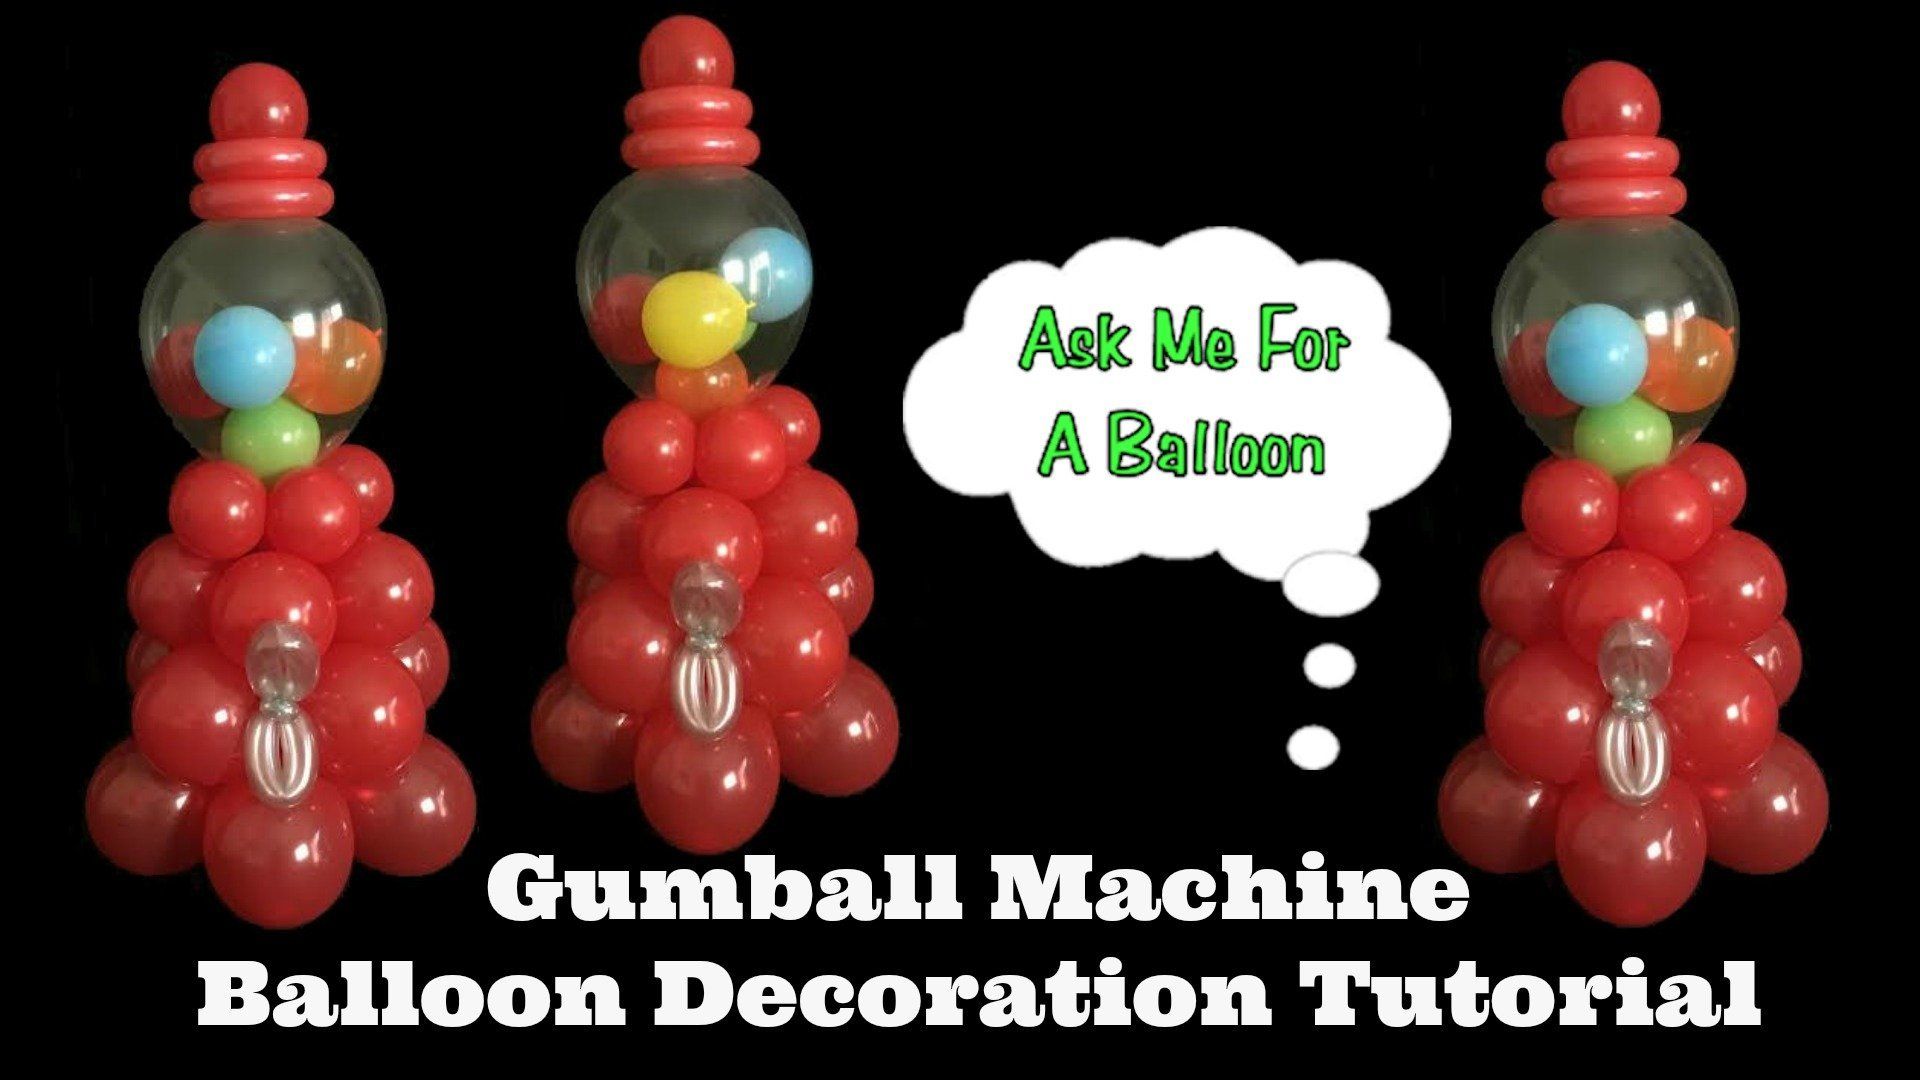 Gumball machine balloon decoration.